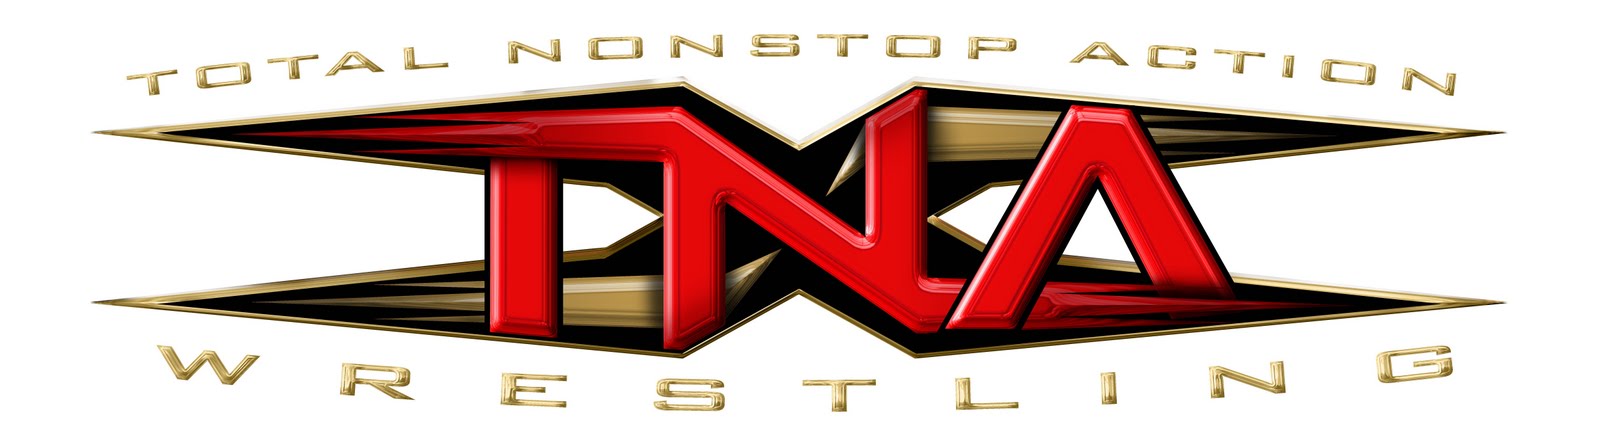 http://static2.wikia.nocookie.net/__cb20130706135451/prowrestling/images/4/46/TNA_Logo_2005.jpg